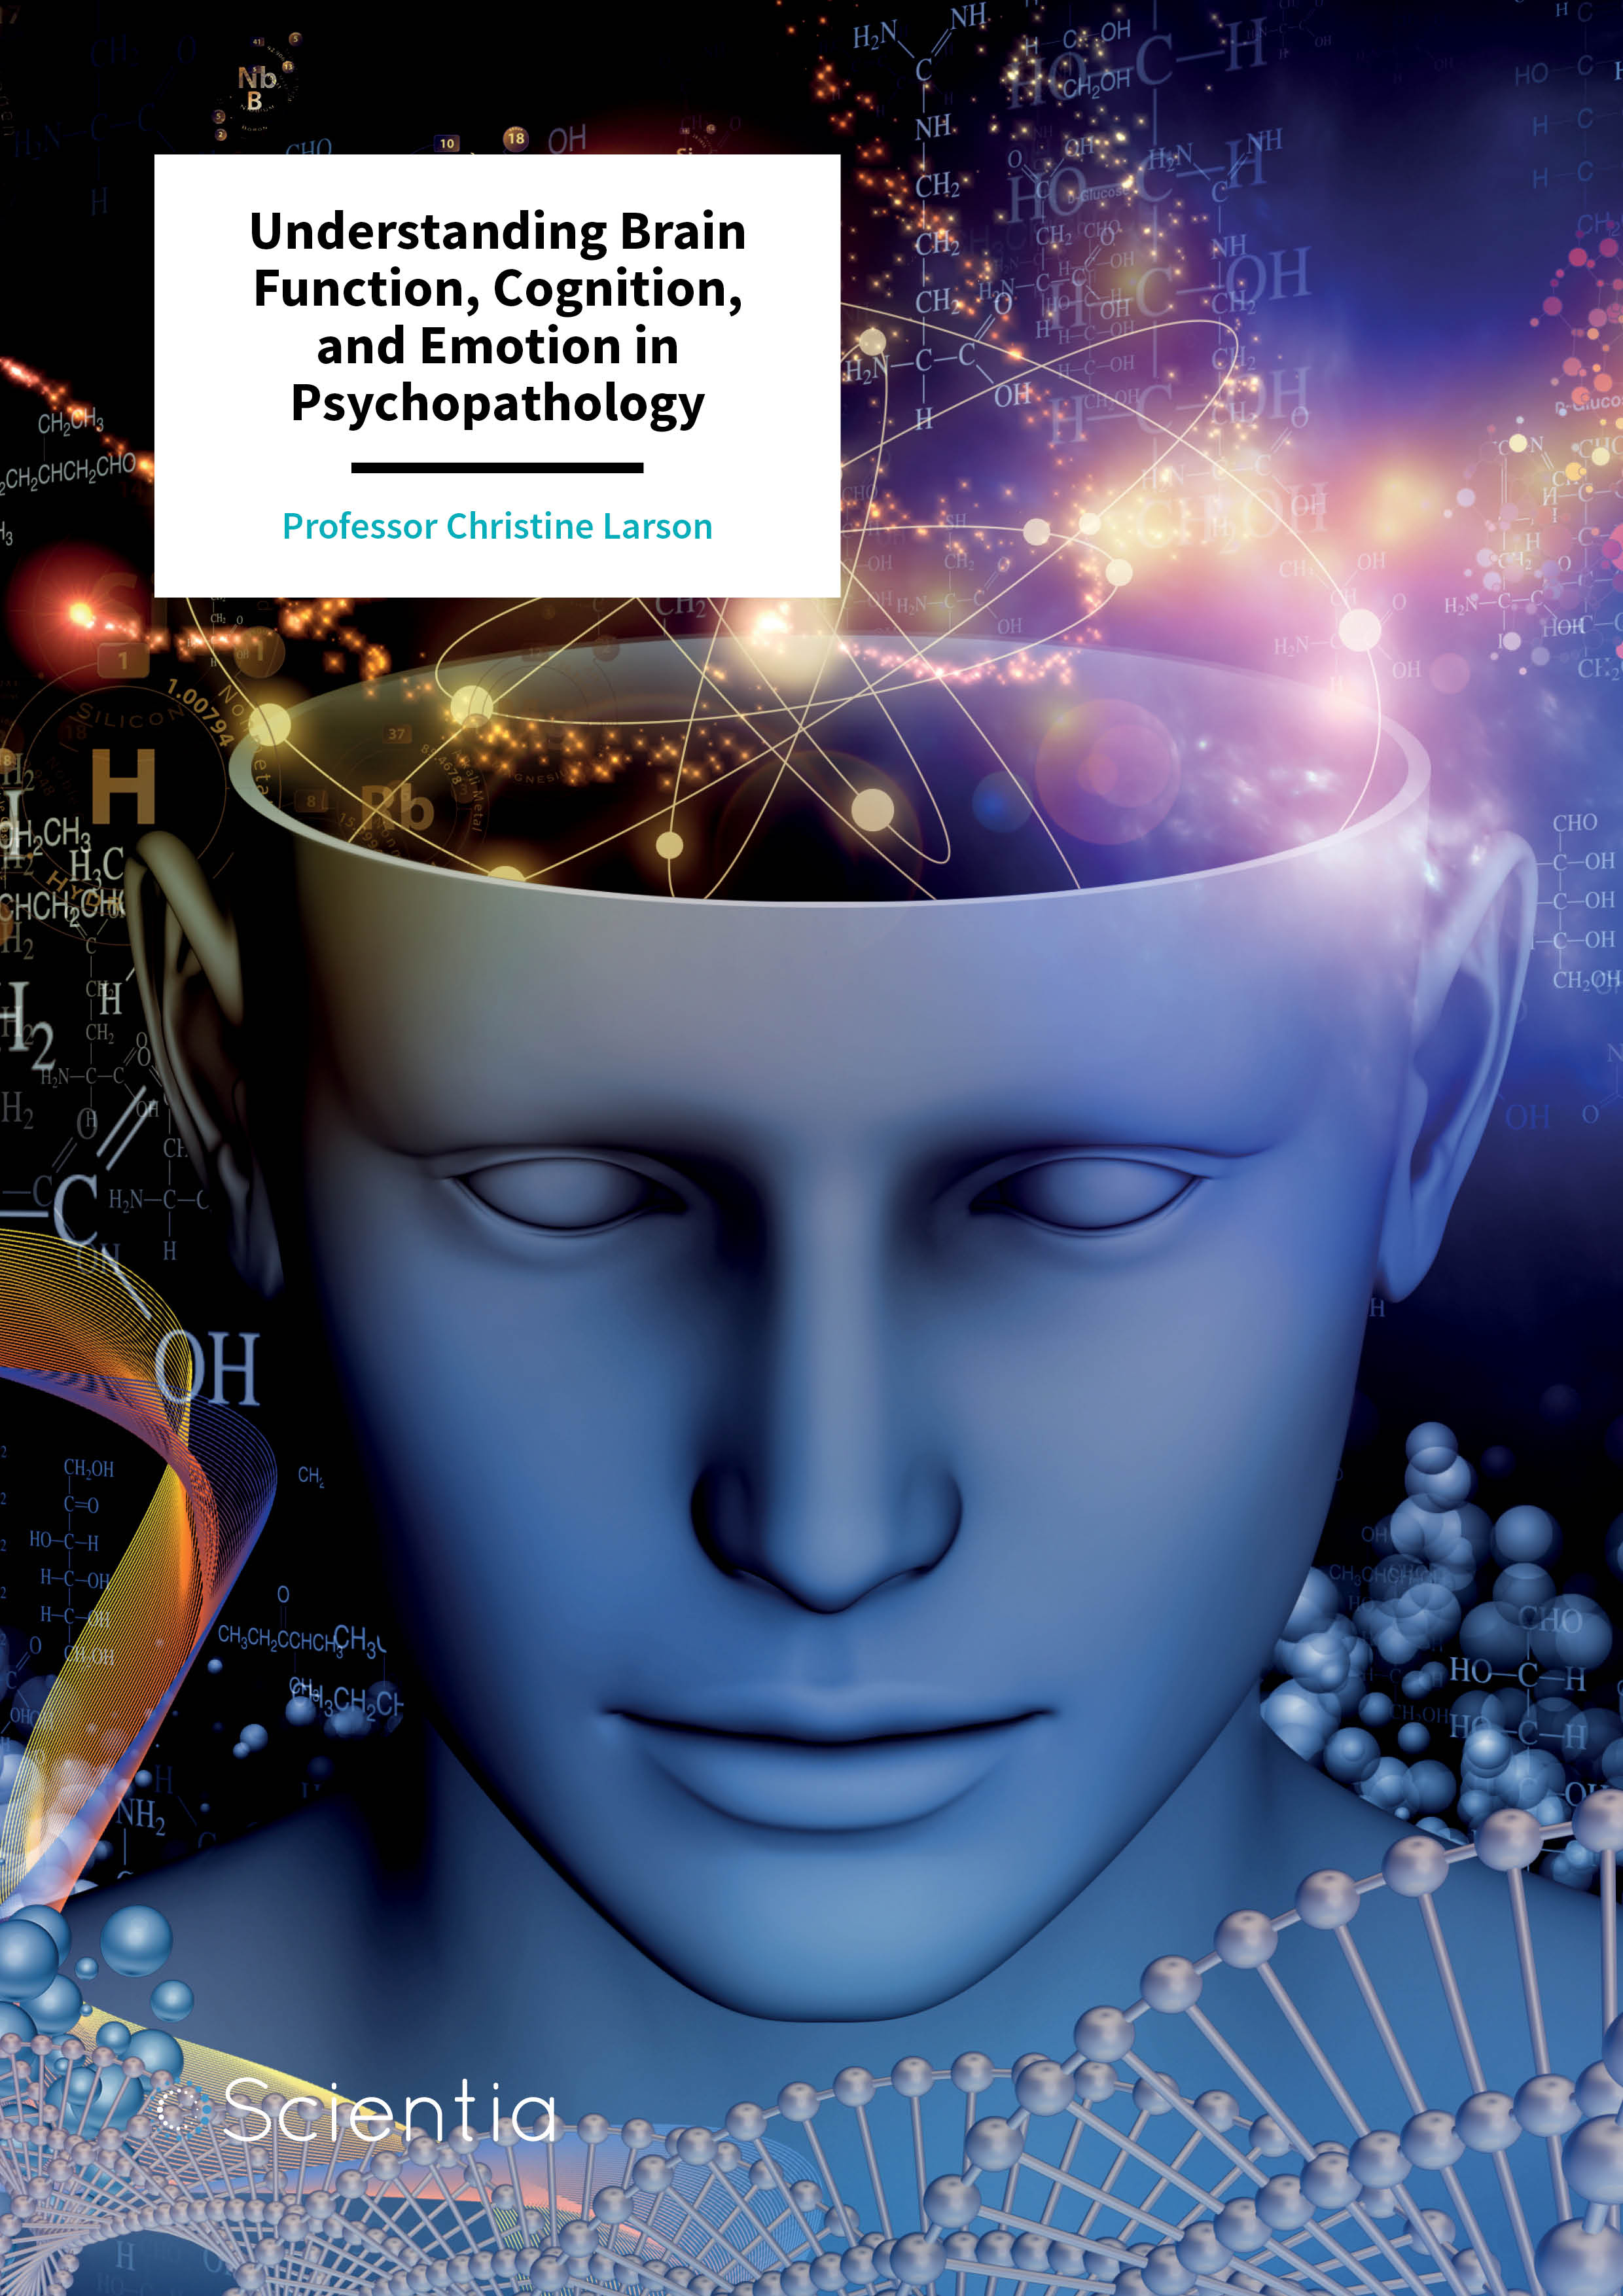 Professor Christine Larson – Understanding Brain Function, Cognition, and Emotion in Psychopathology